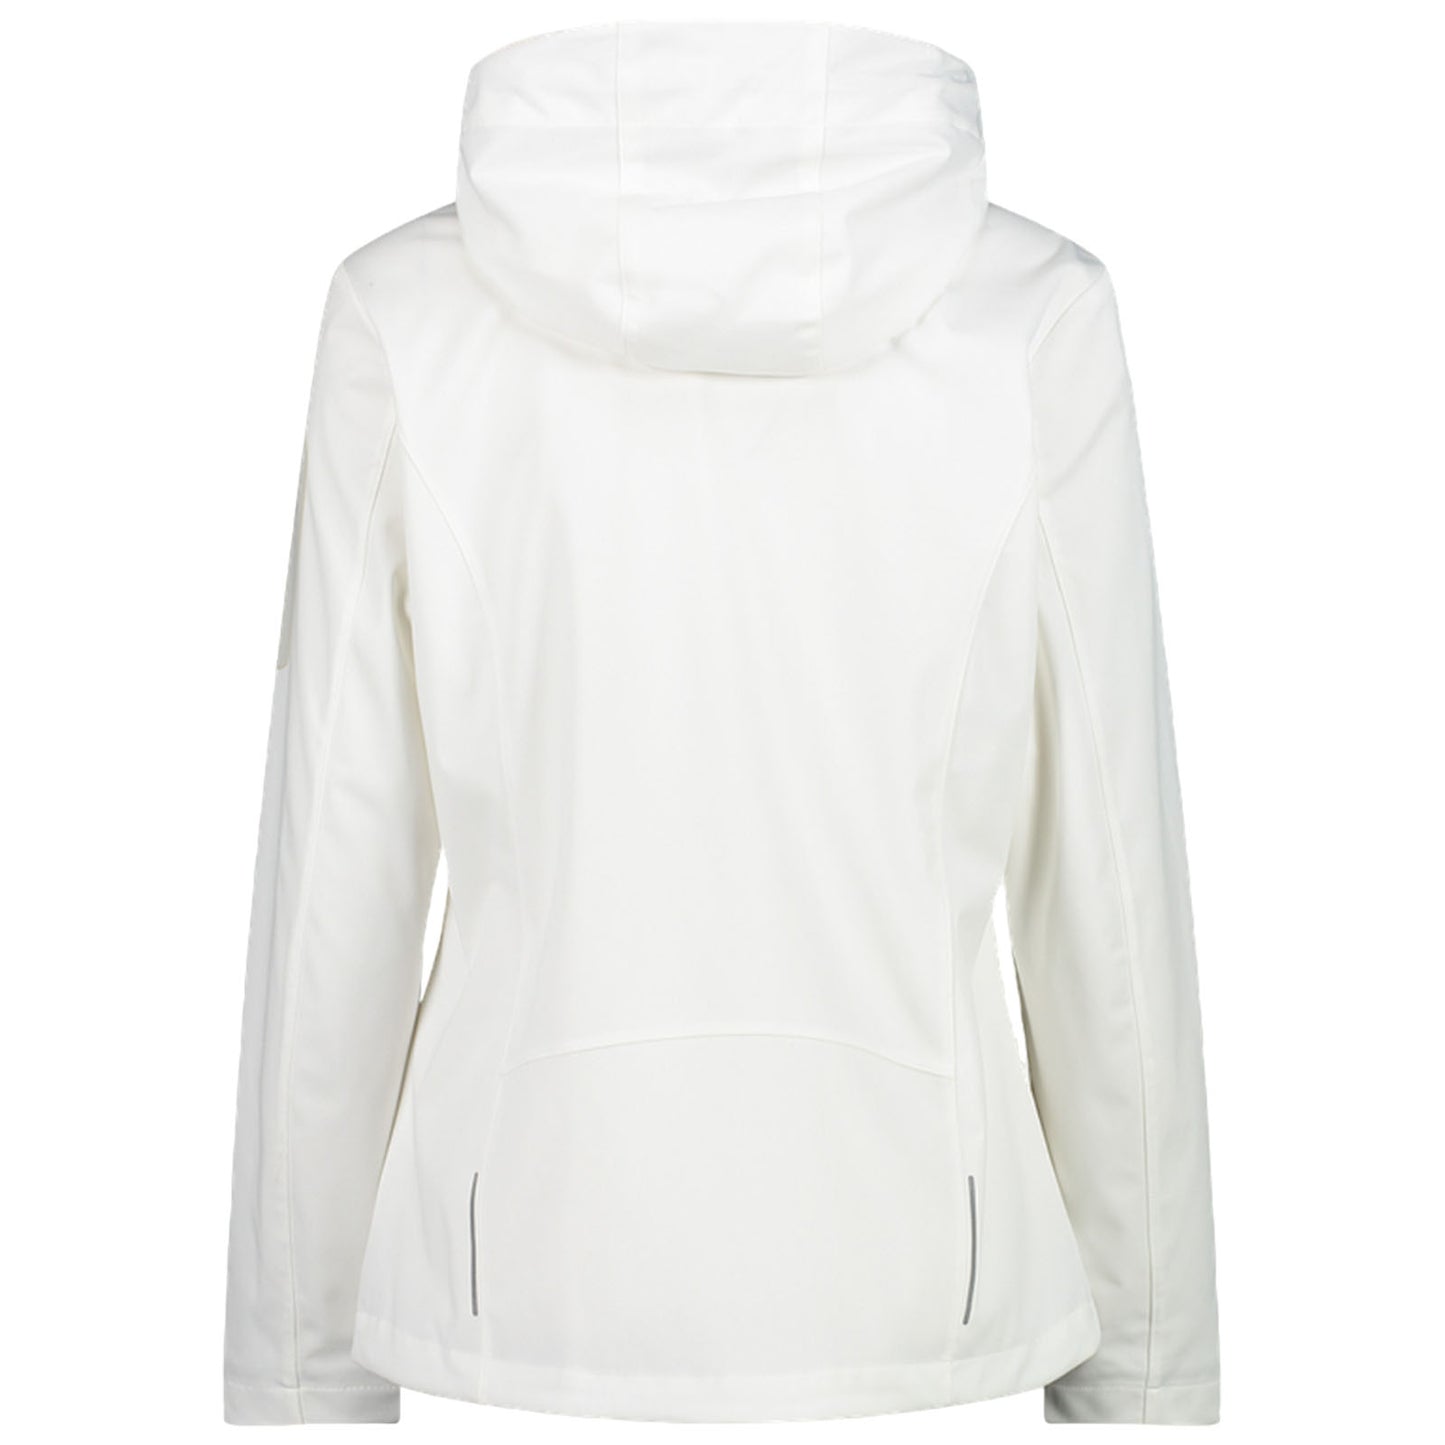 CMP Ladies Light Softshell Fleece Jacket